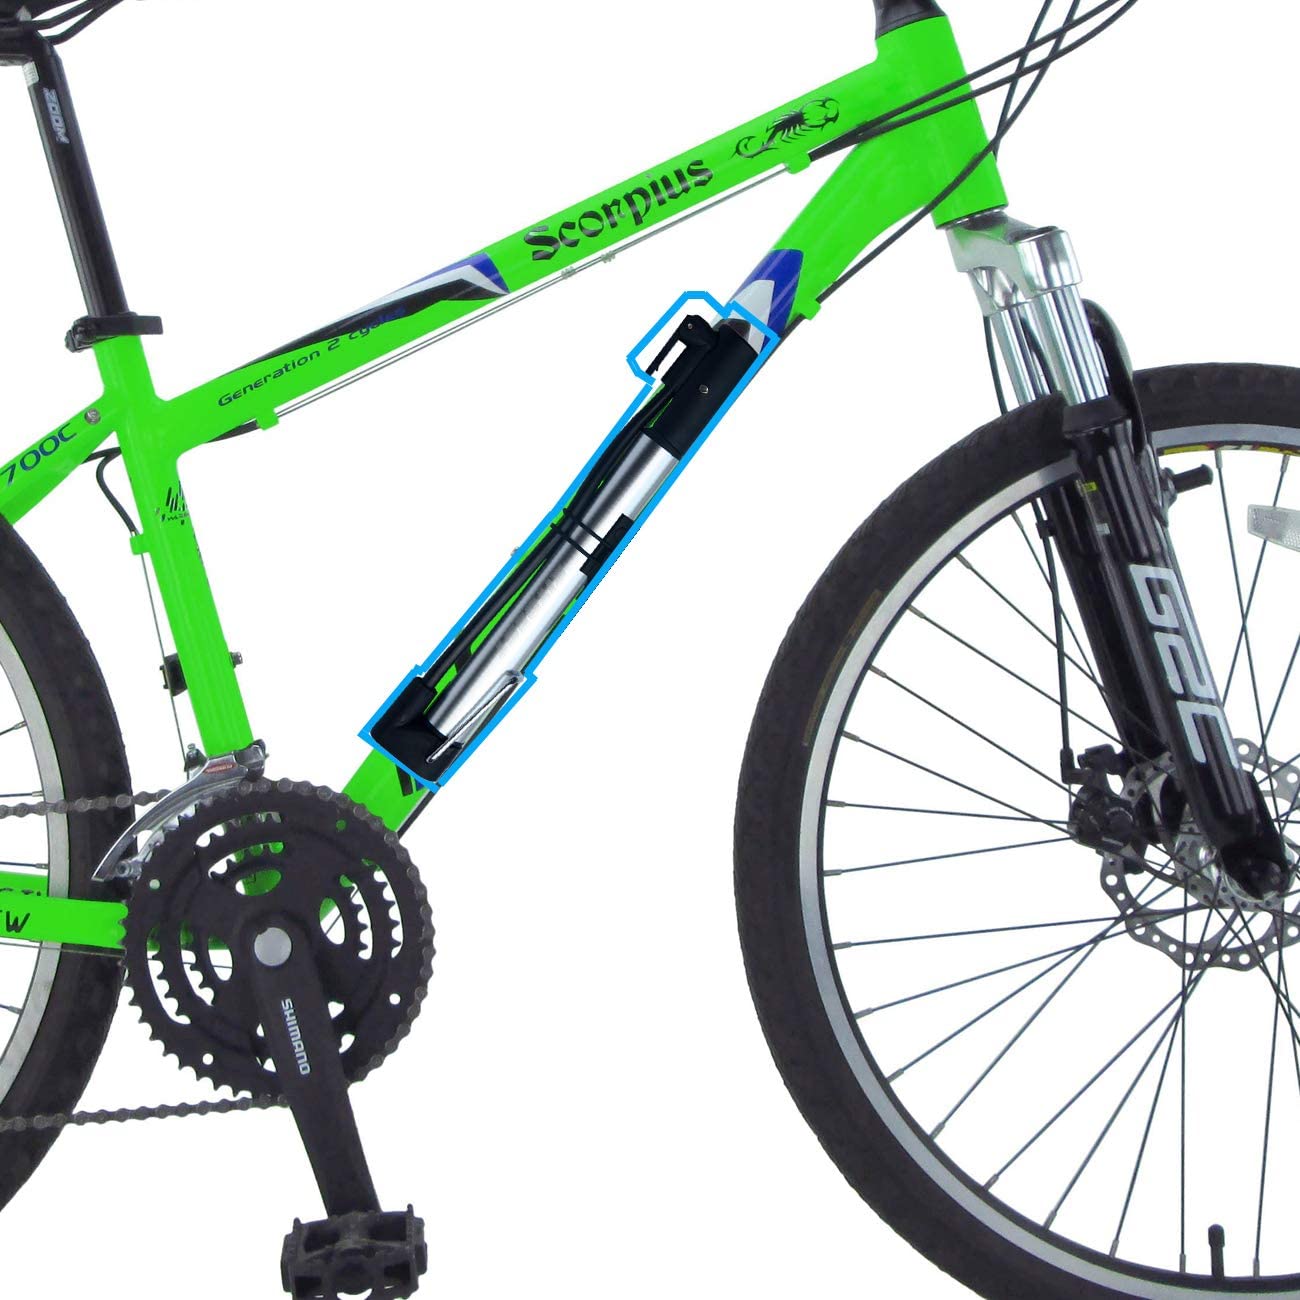 KITBEST Bike Pump, Ball Pump Inflator Bicycle Floor Pump with High Pressure,130 PSI Max